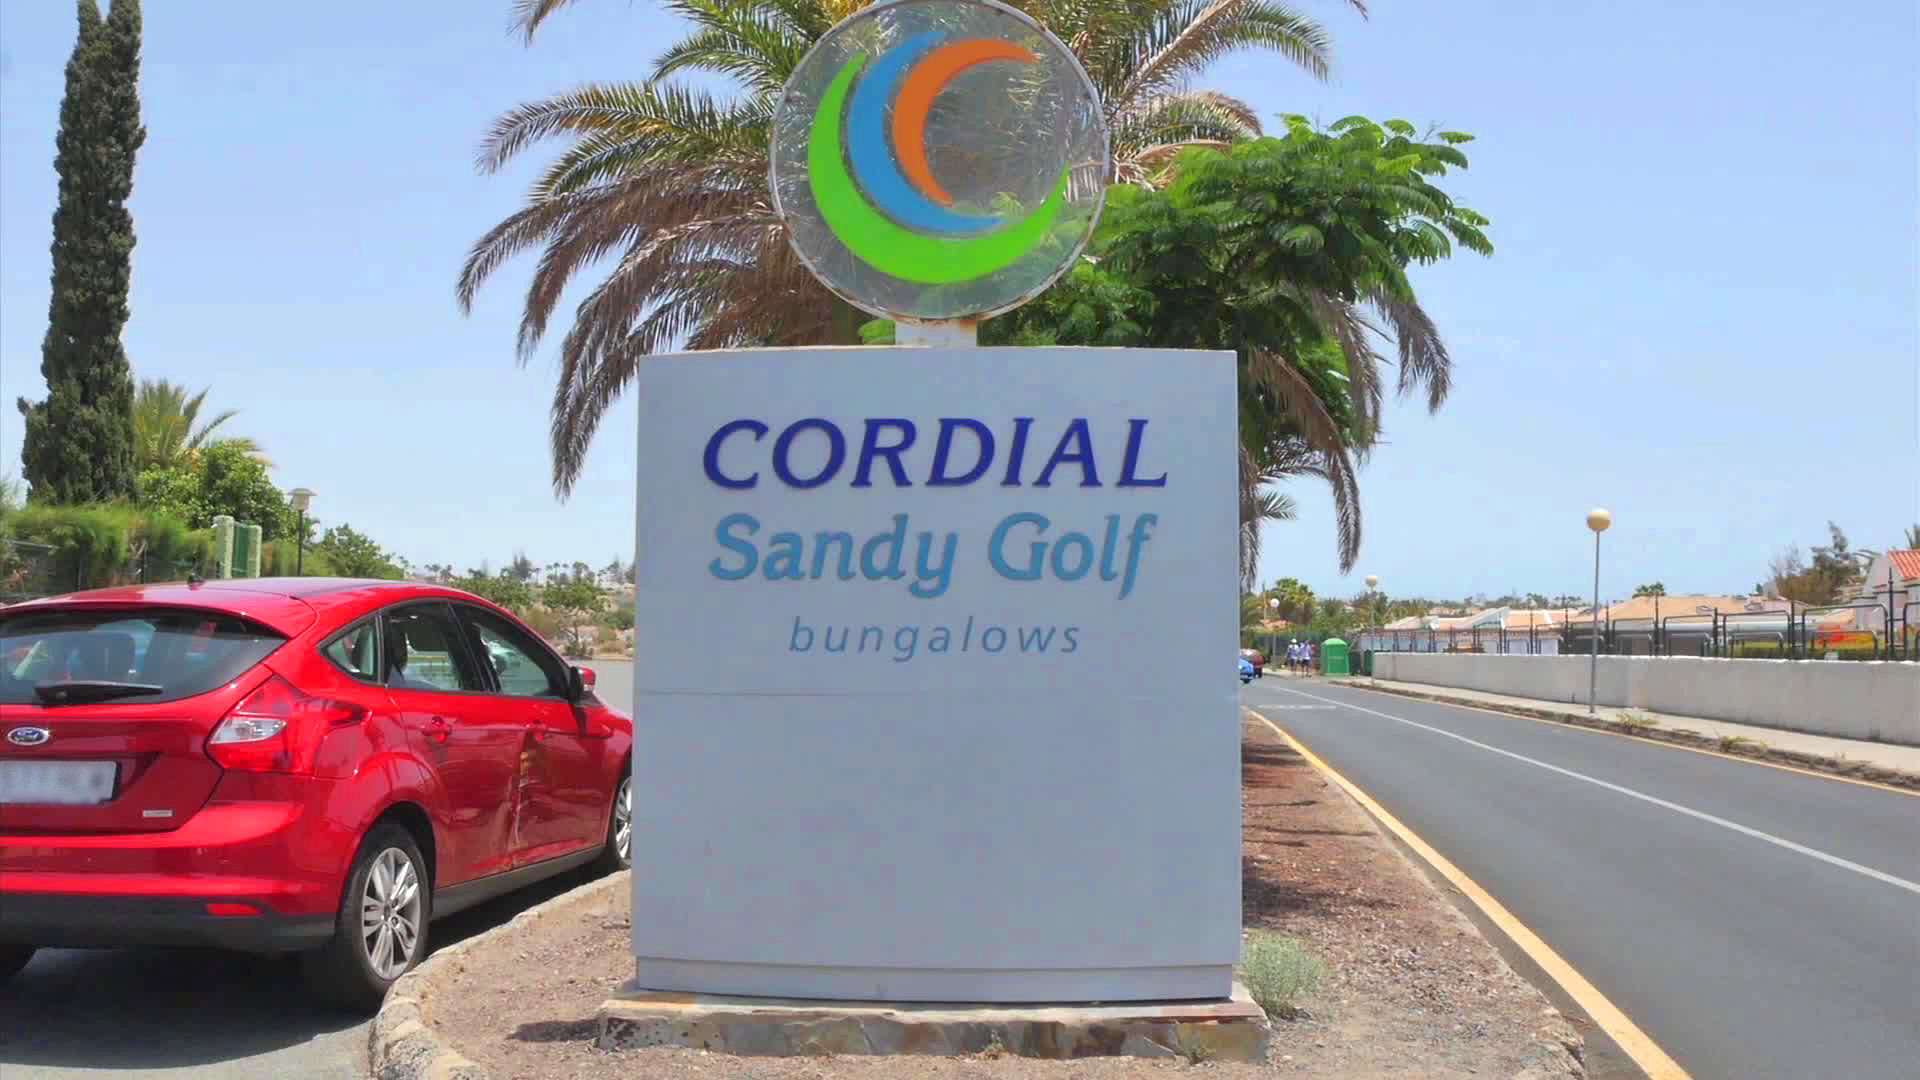 Cordial Sandy Golf Bungalows